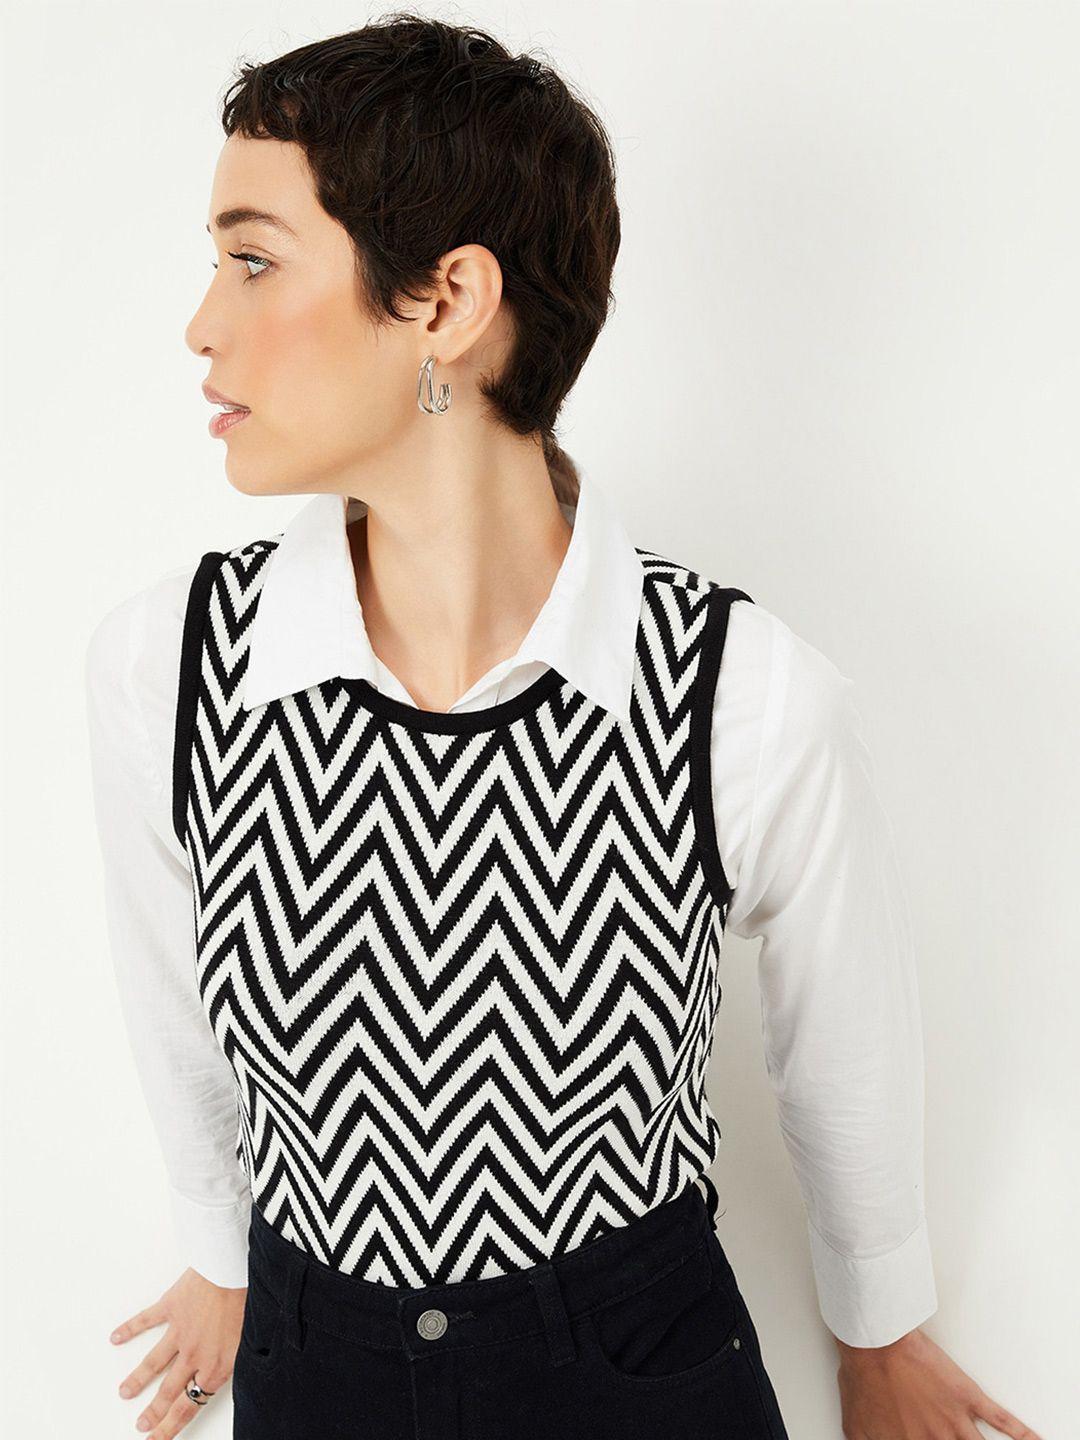 max women white & black chevron printed sweater vest